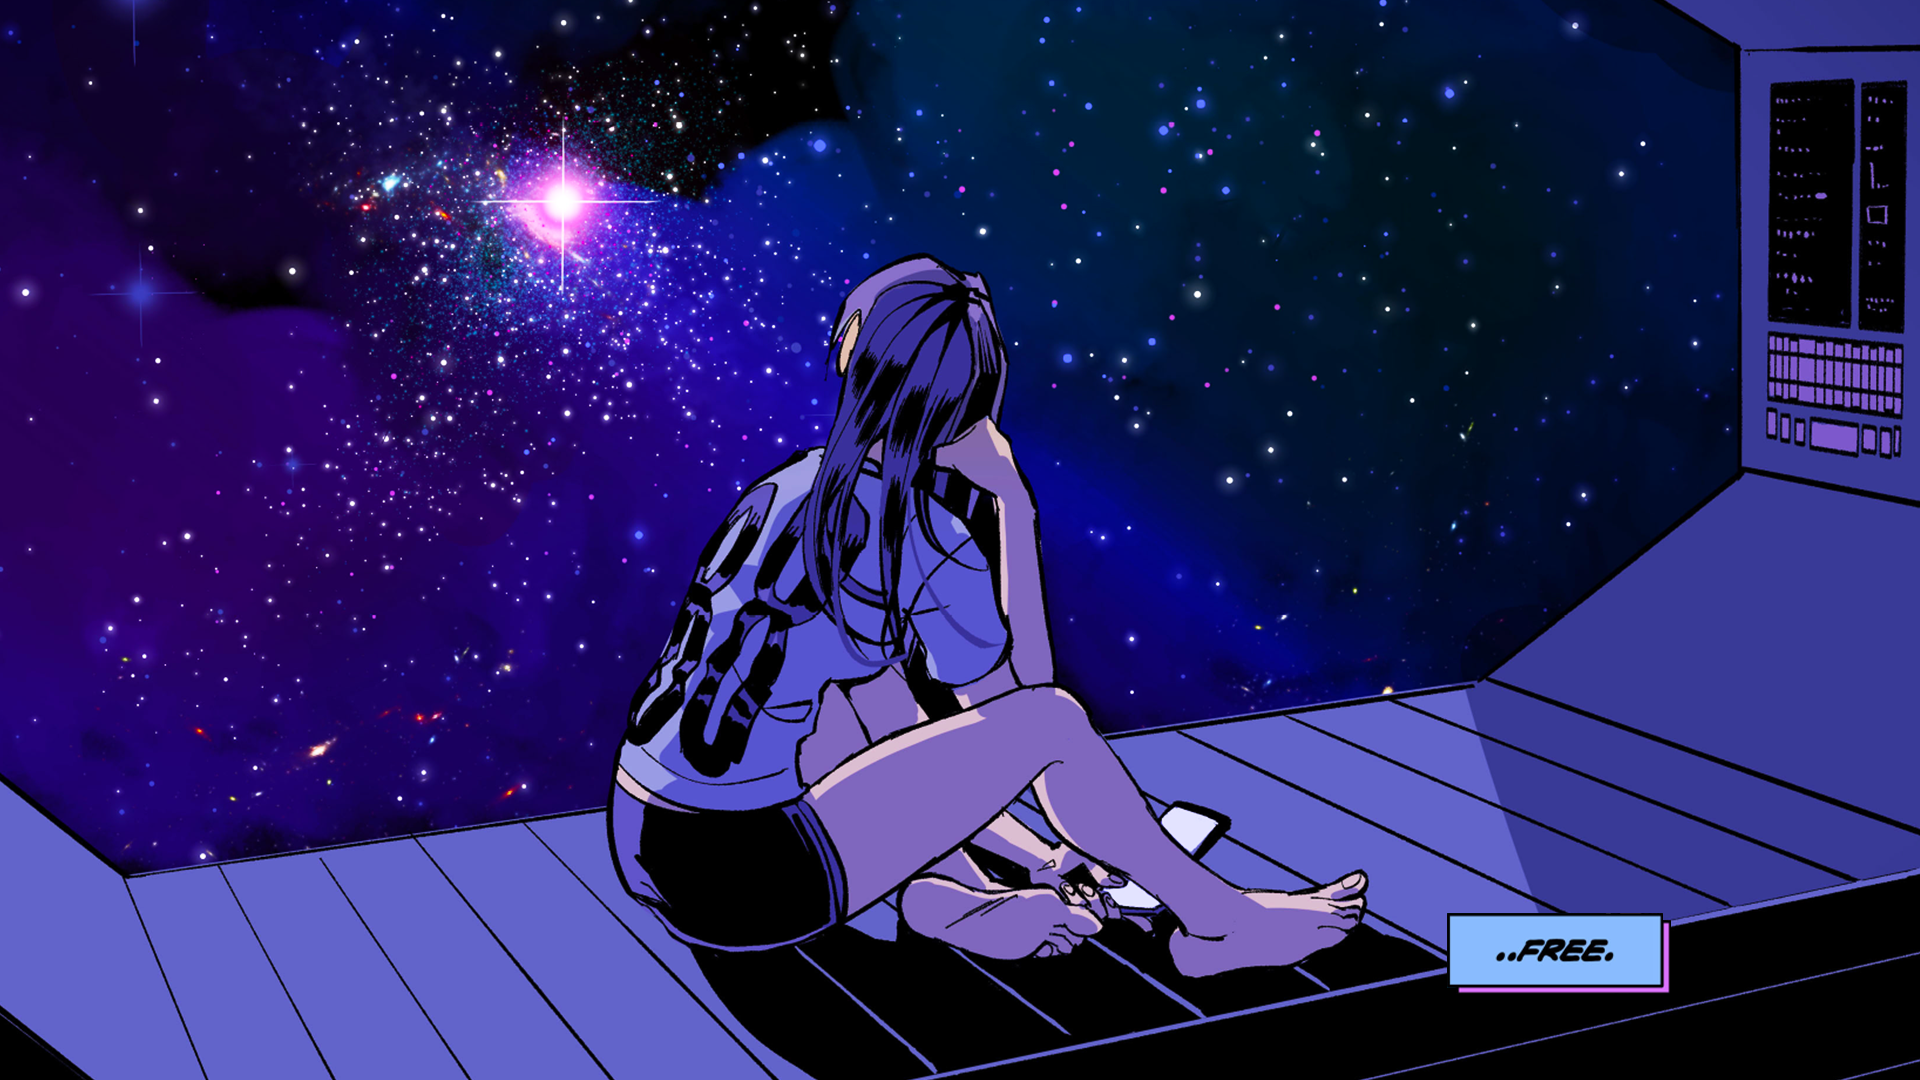 Vashperado Space Stars 88 Chan 88 Comic Spaceship Galaxy Purple Background Long Hair Loneliness Comi 1920x1080